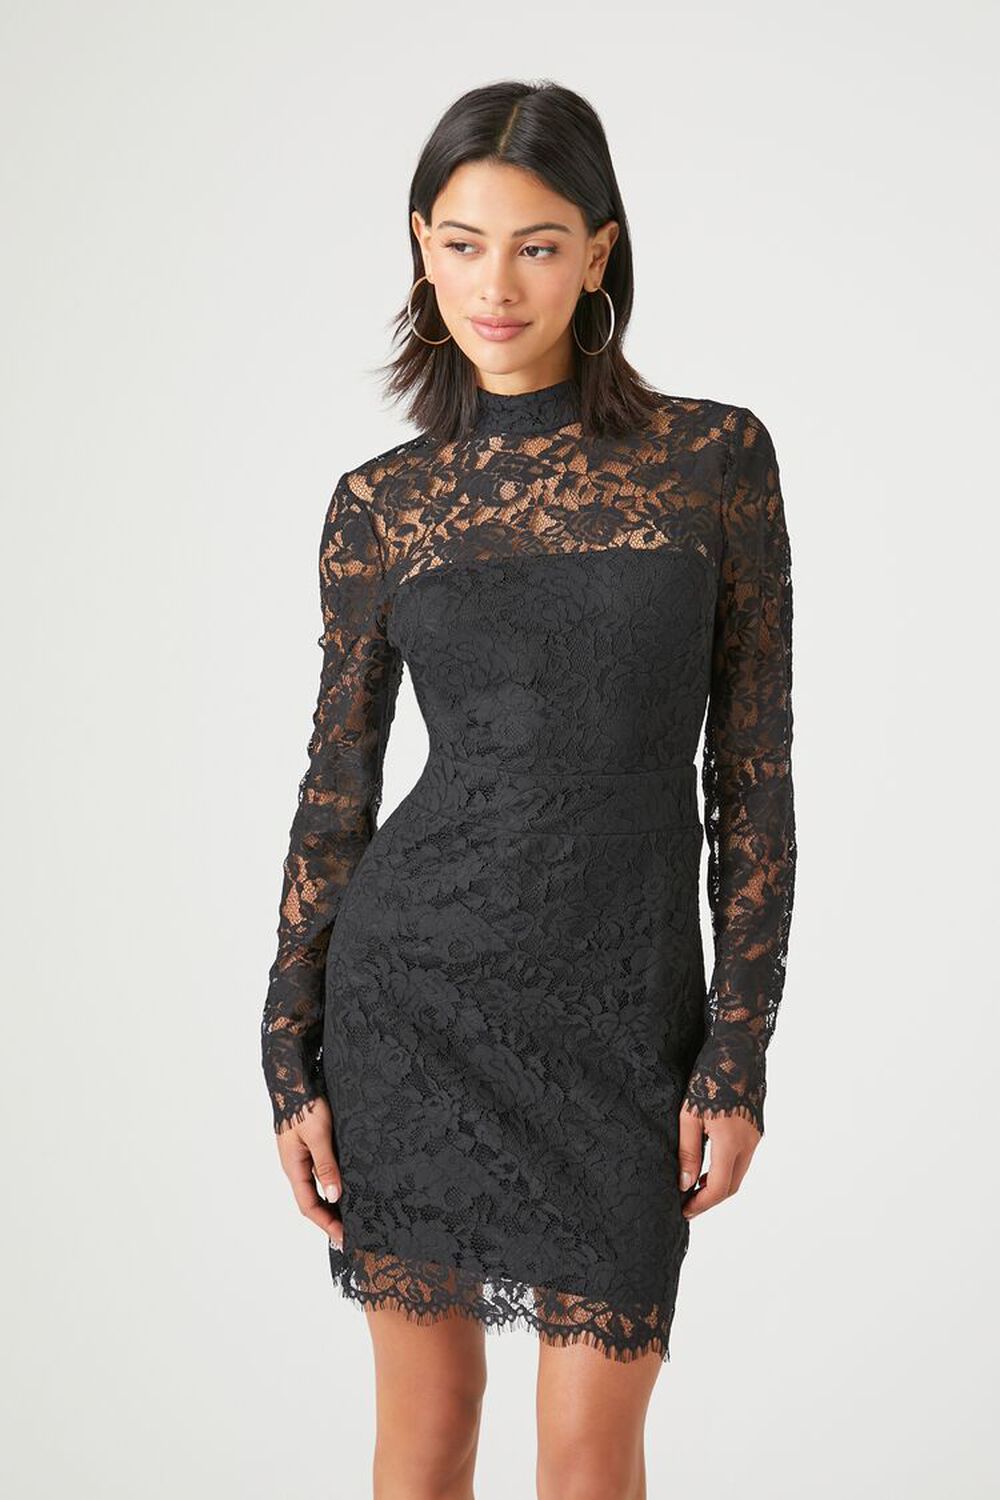 Black Lace Trim High Neck Sheer Top Bodycon Dress